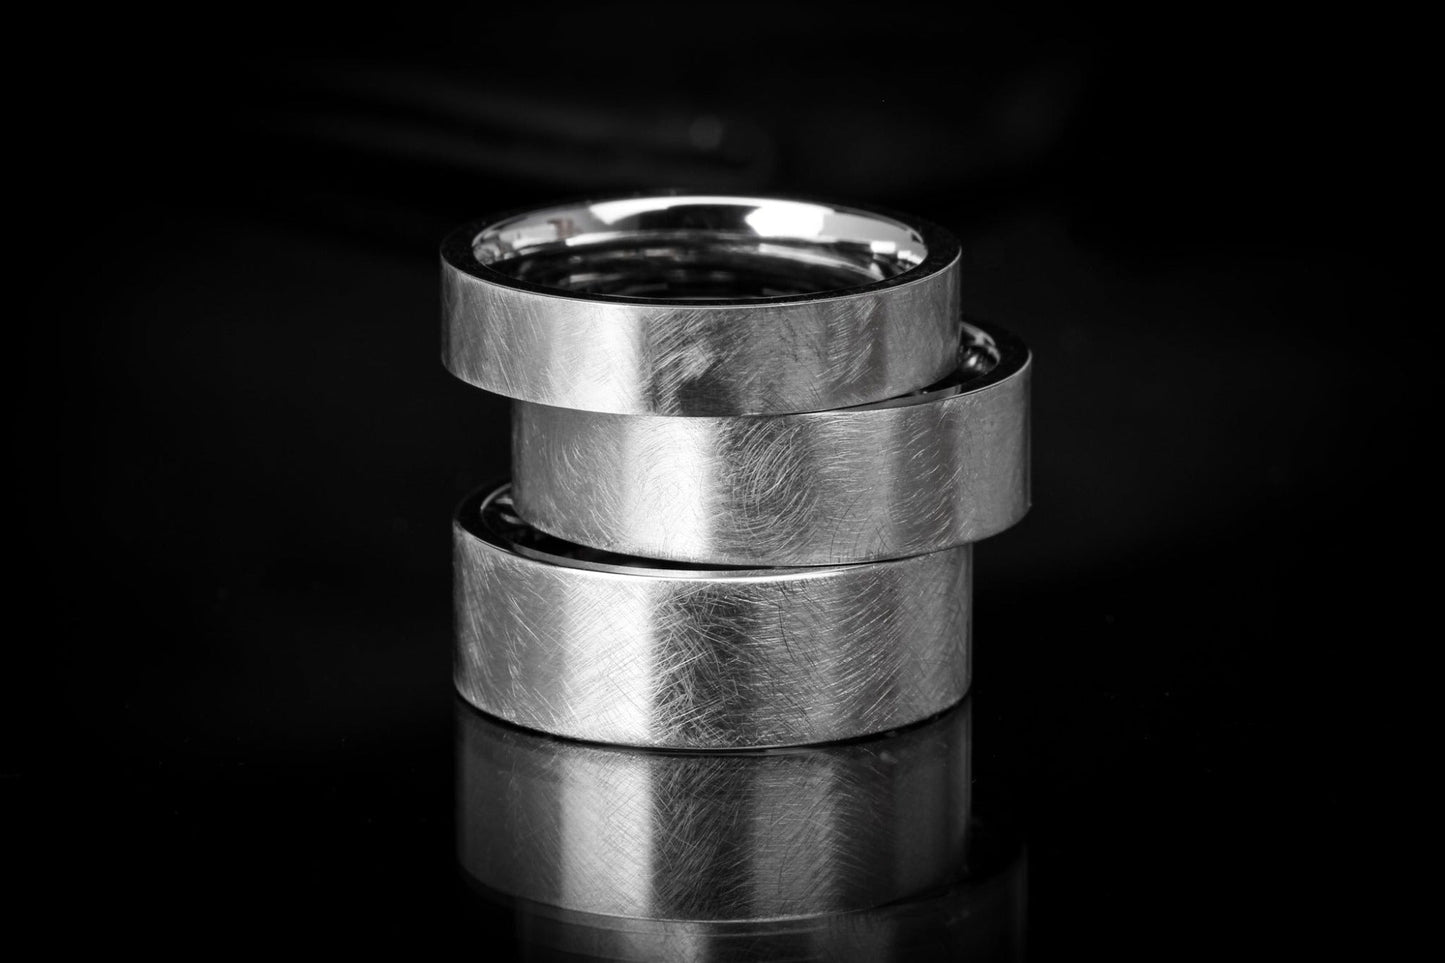 Couples "Brüns" Distressed Titanium Rings Rings 